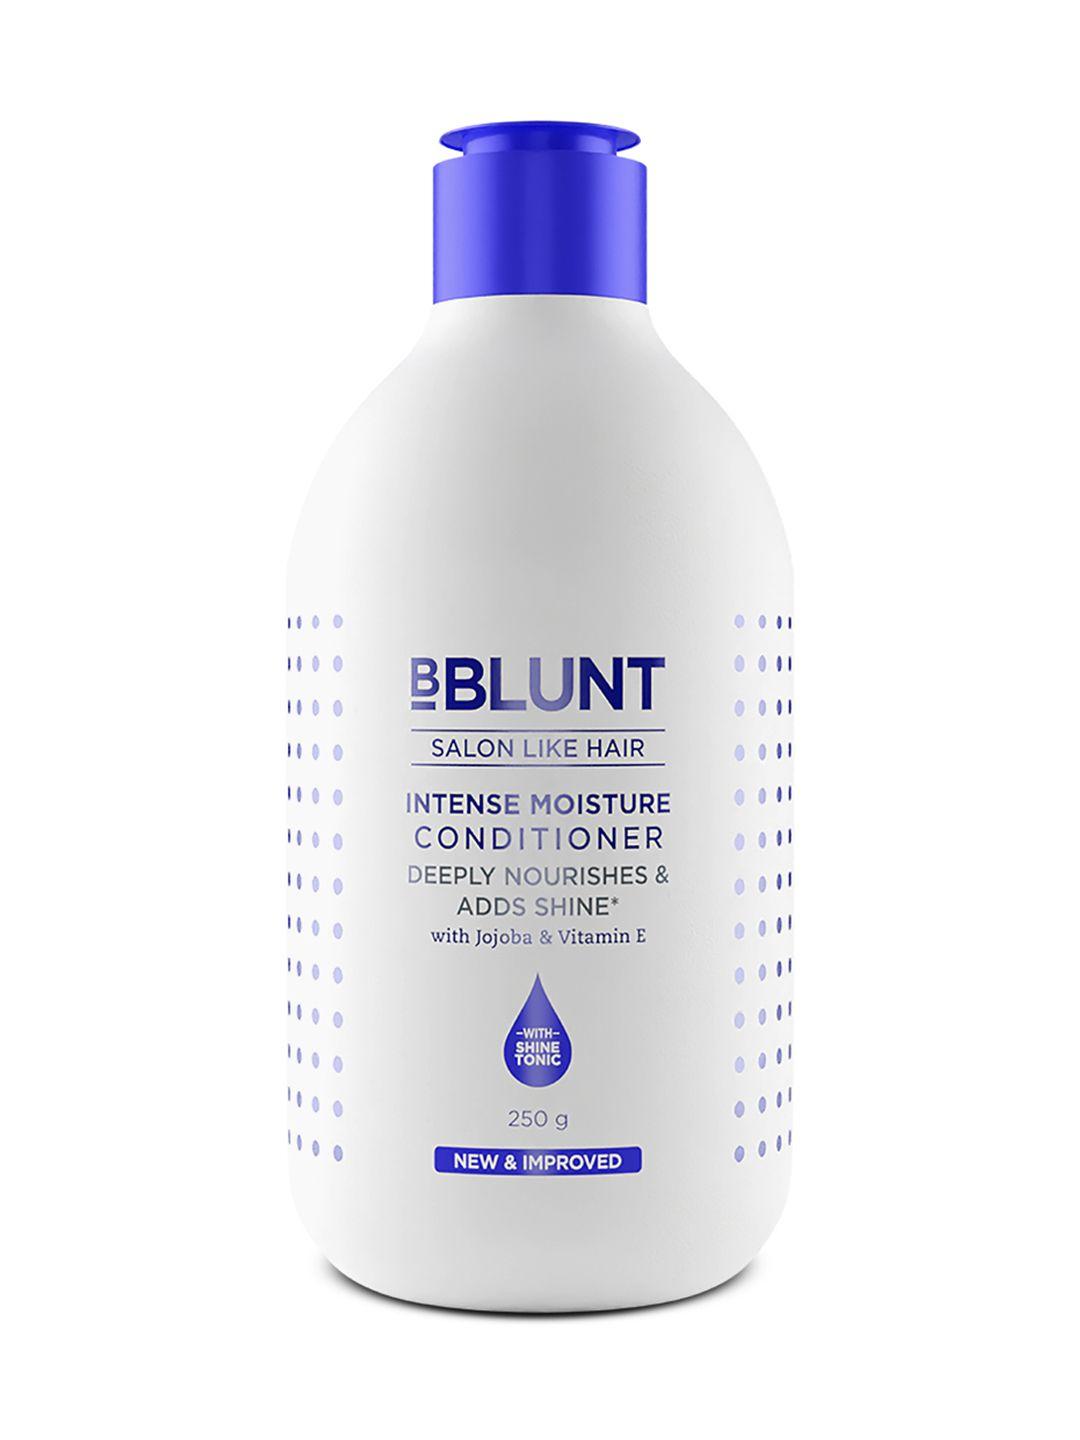 BBLUNT Salon Like Hair Intense Moisture Conditioner with Vitamin E & Jojoba - 250 g